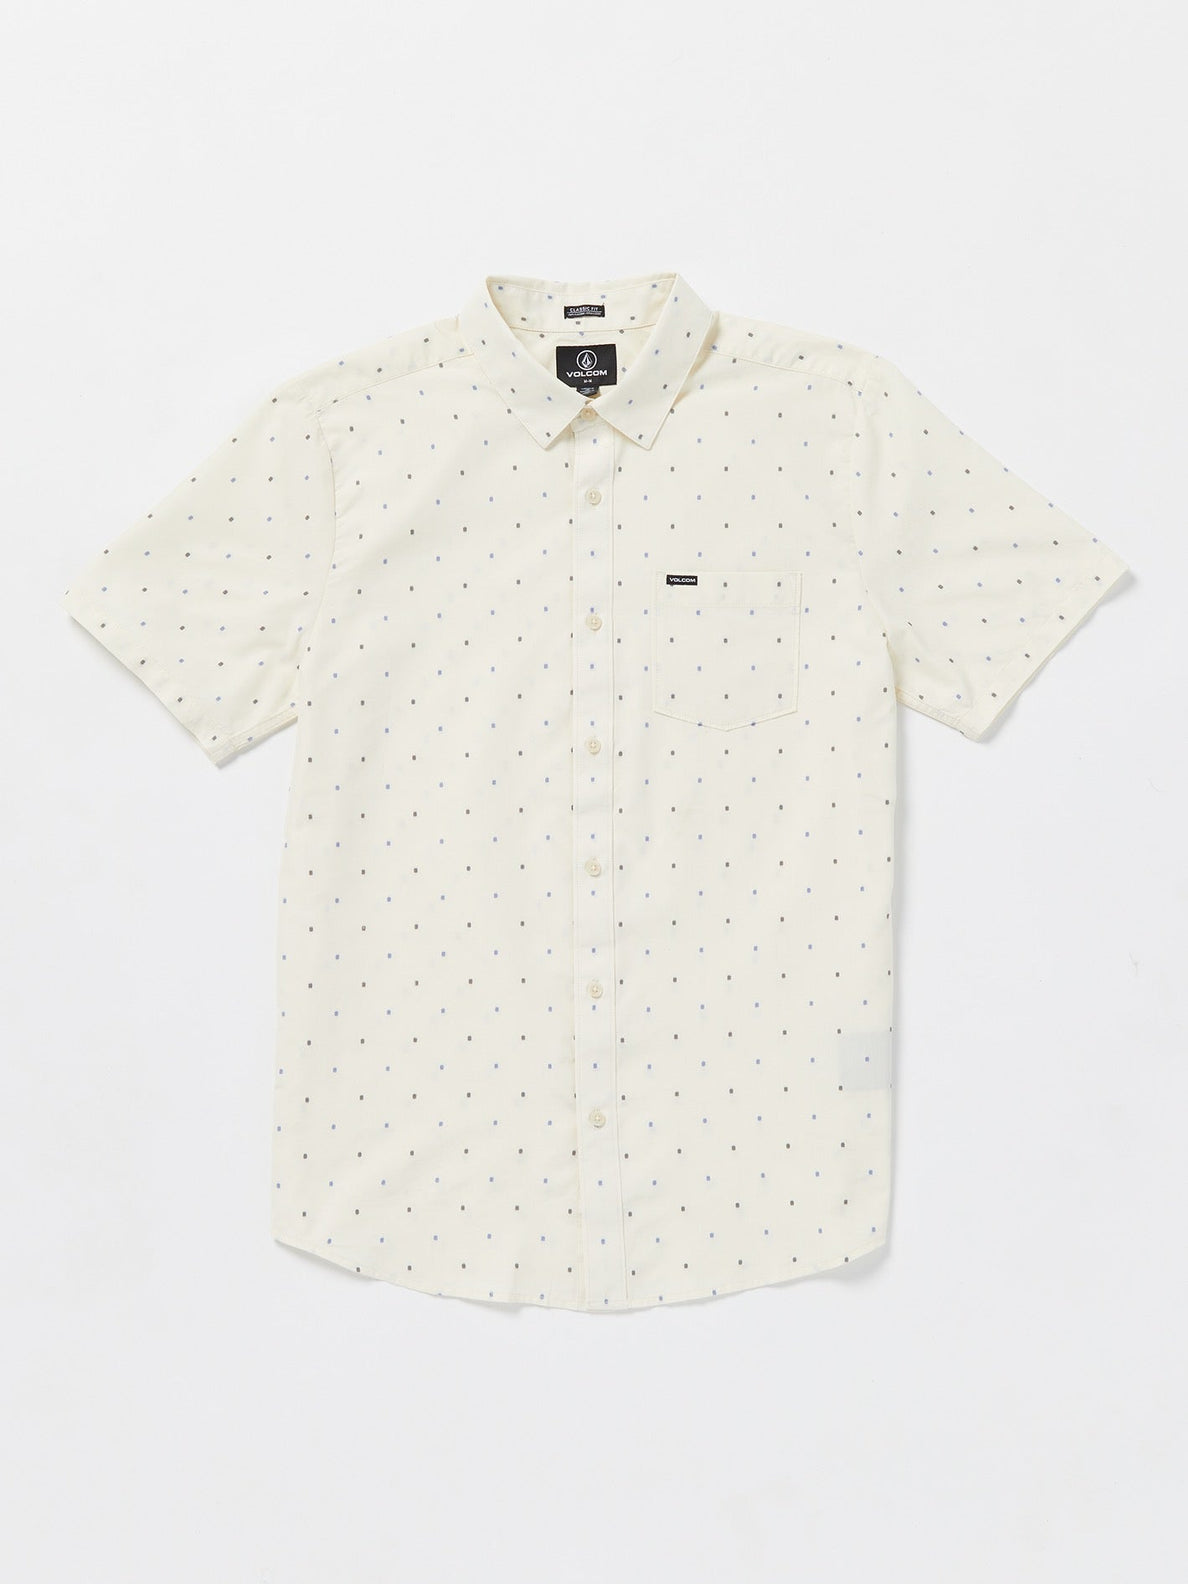 Hone Stone Woven Short Sleeve Shirt - Off White